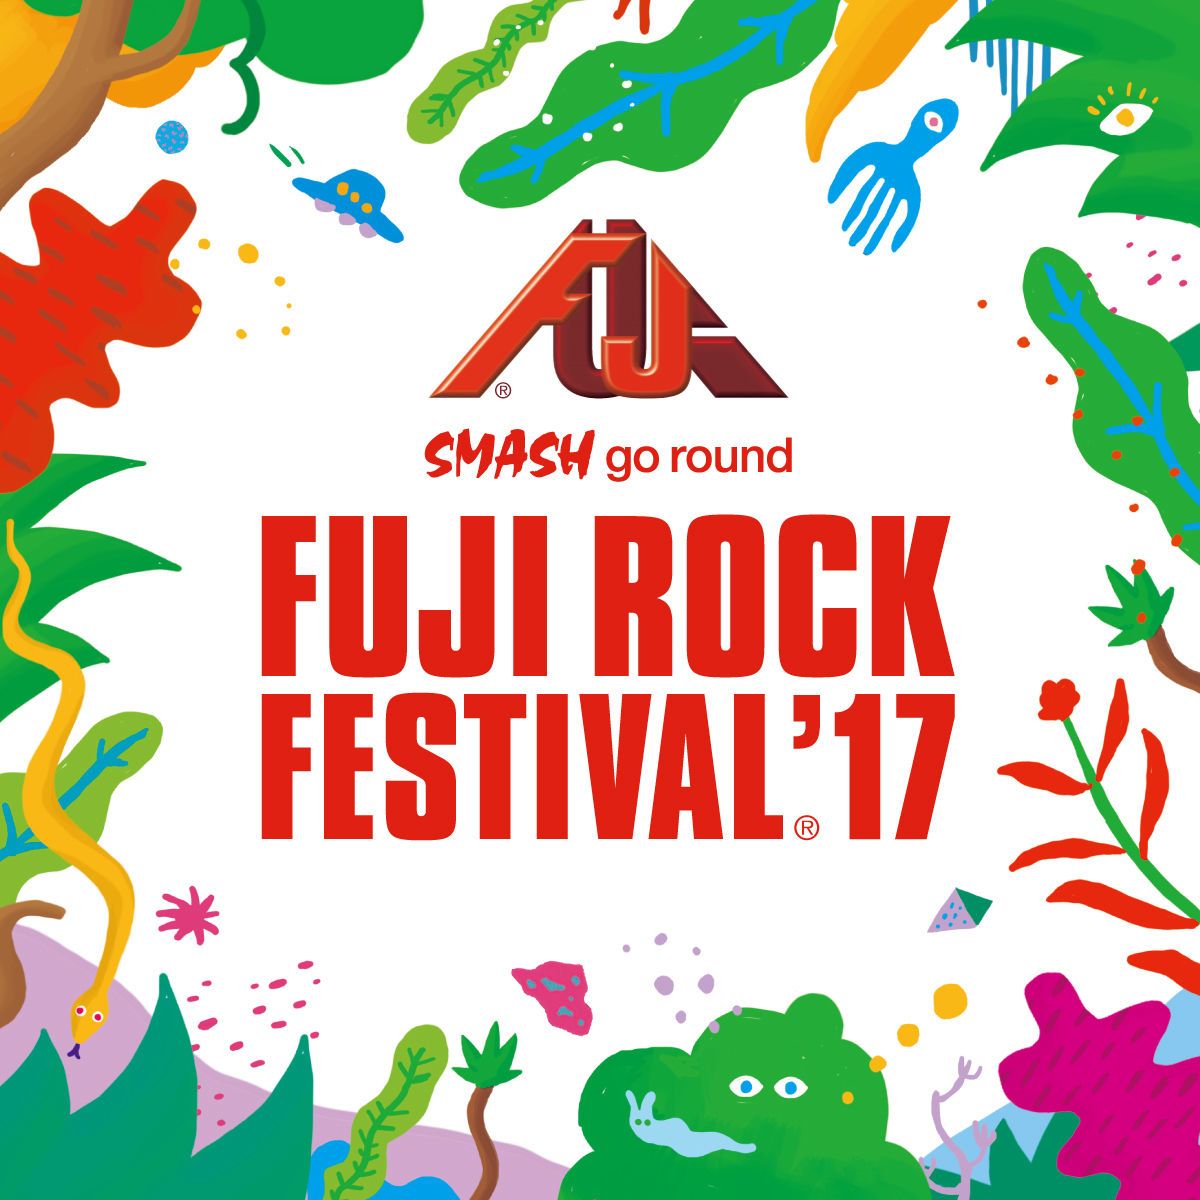 「FUJI ROCK FESTIVAL '17」ラインナップ第7弾にDJ YOGURTやFORCE OF NATURE、スチャダラパーなど。ステージ別ラインナップも公開